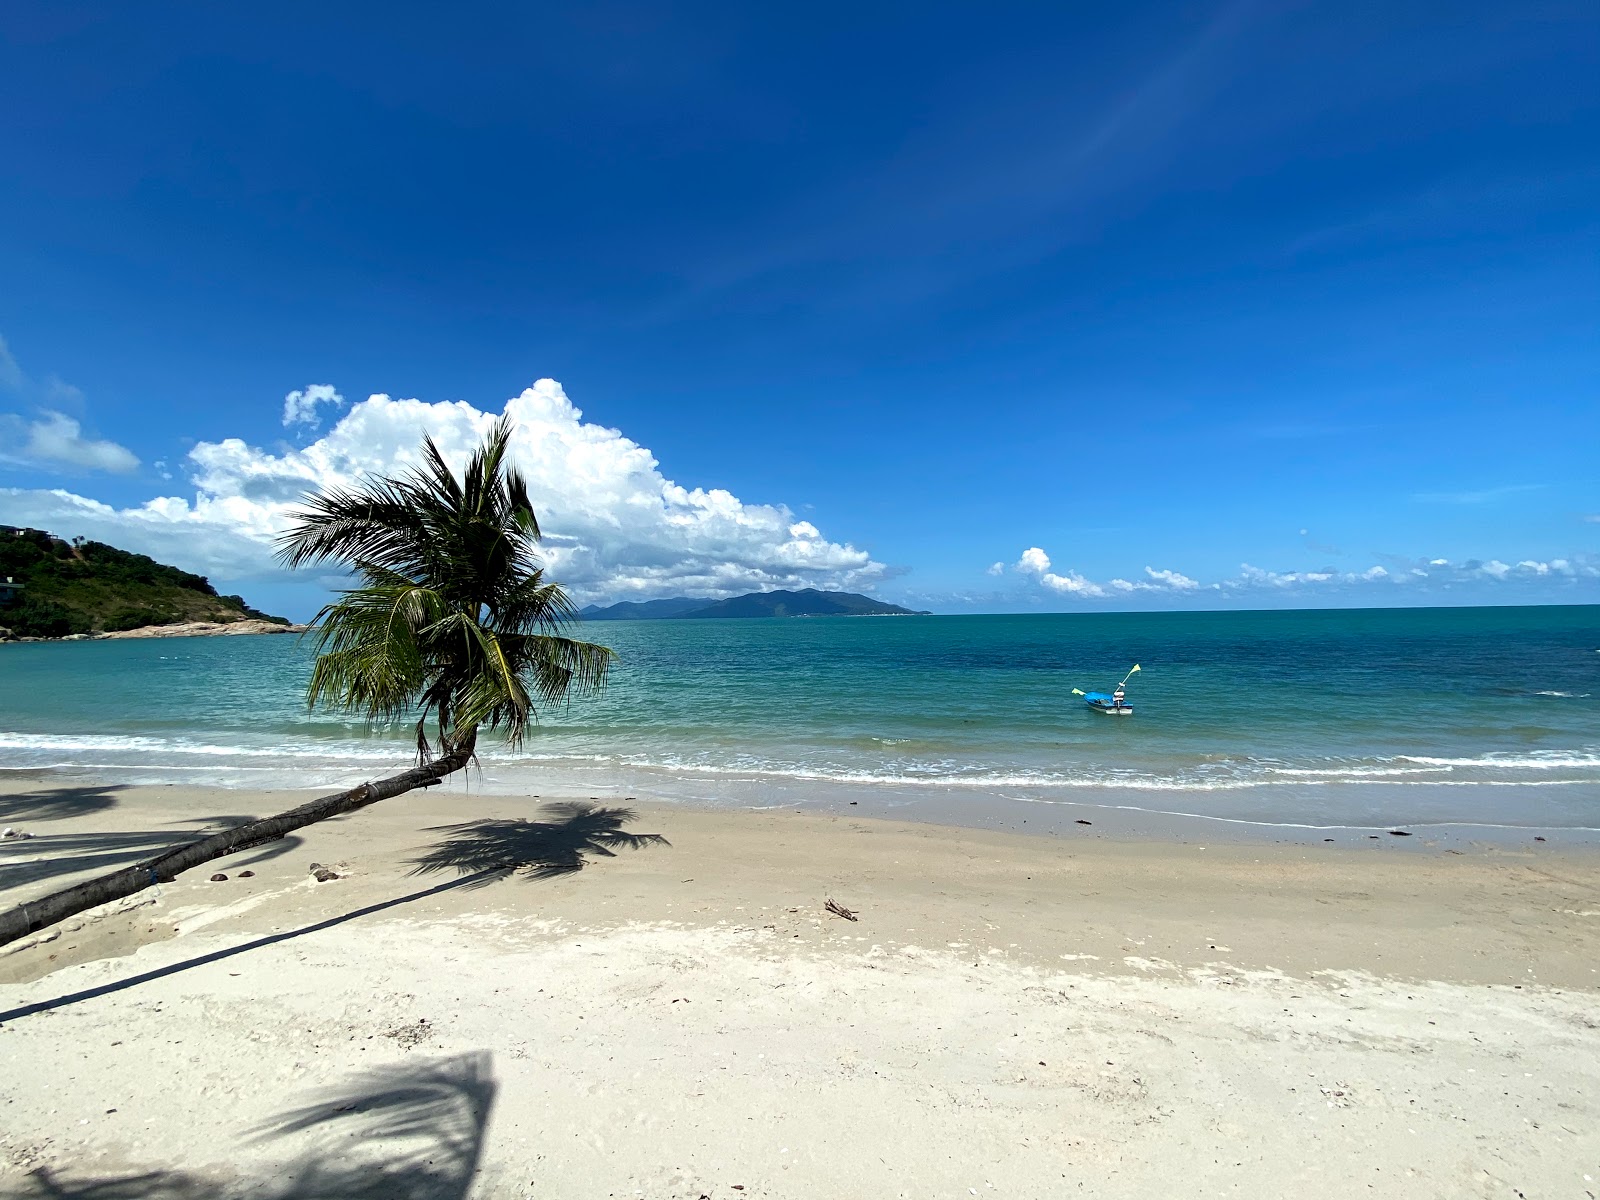 Fotografie cu Thongson Bay beach - locul popular printre cunoscătorii de relaxare